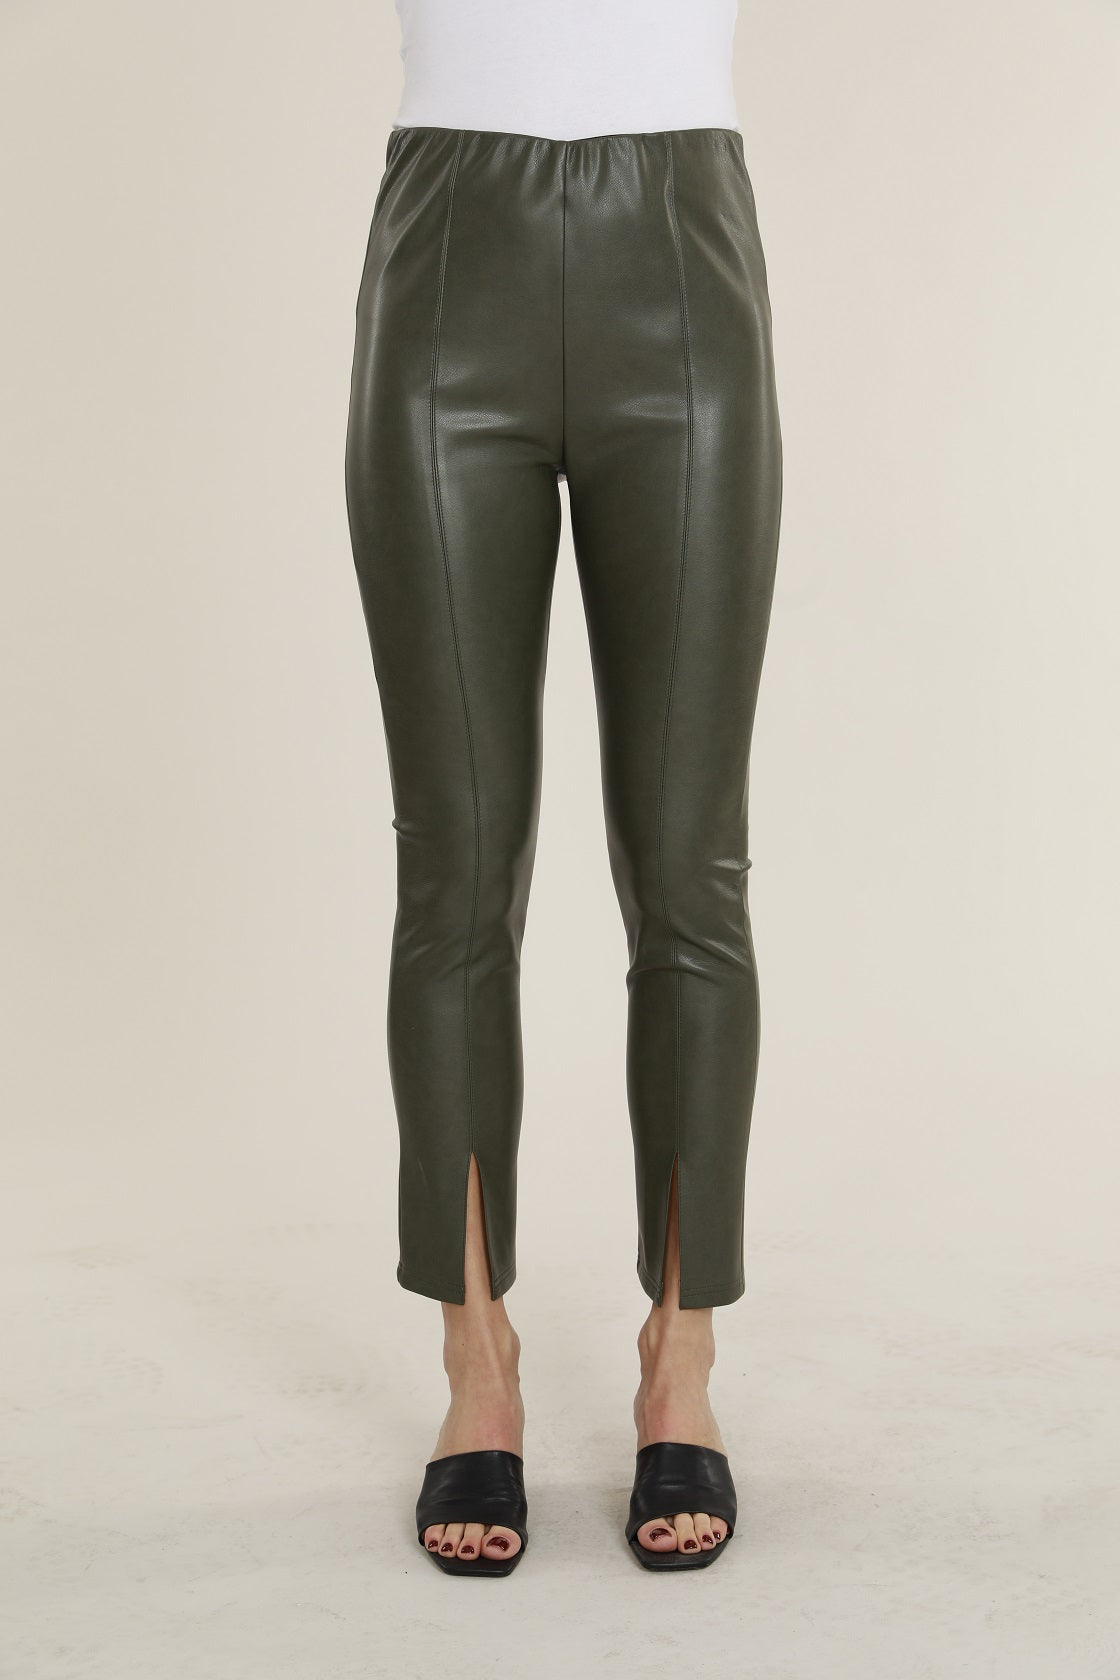 Zara Cream Vegan Faux Leather Ankle Zip High Waisted Leggings Pants